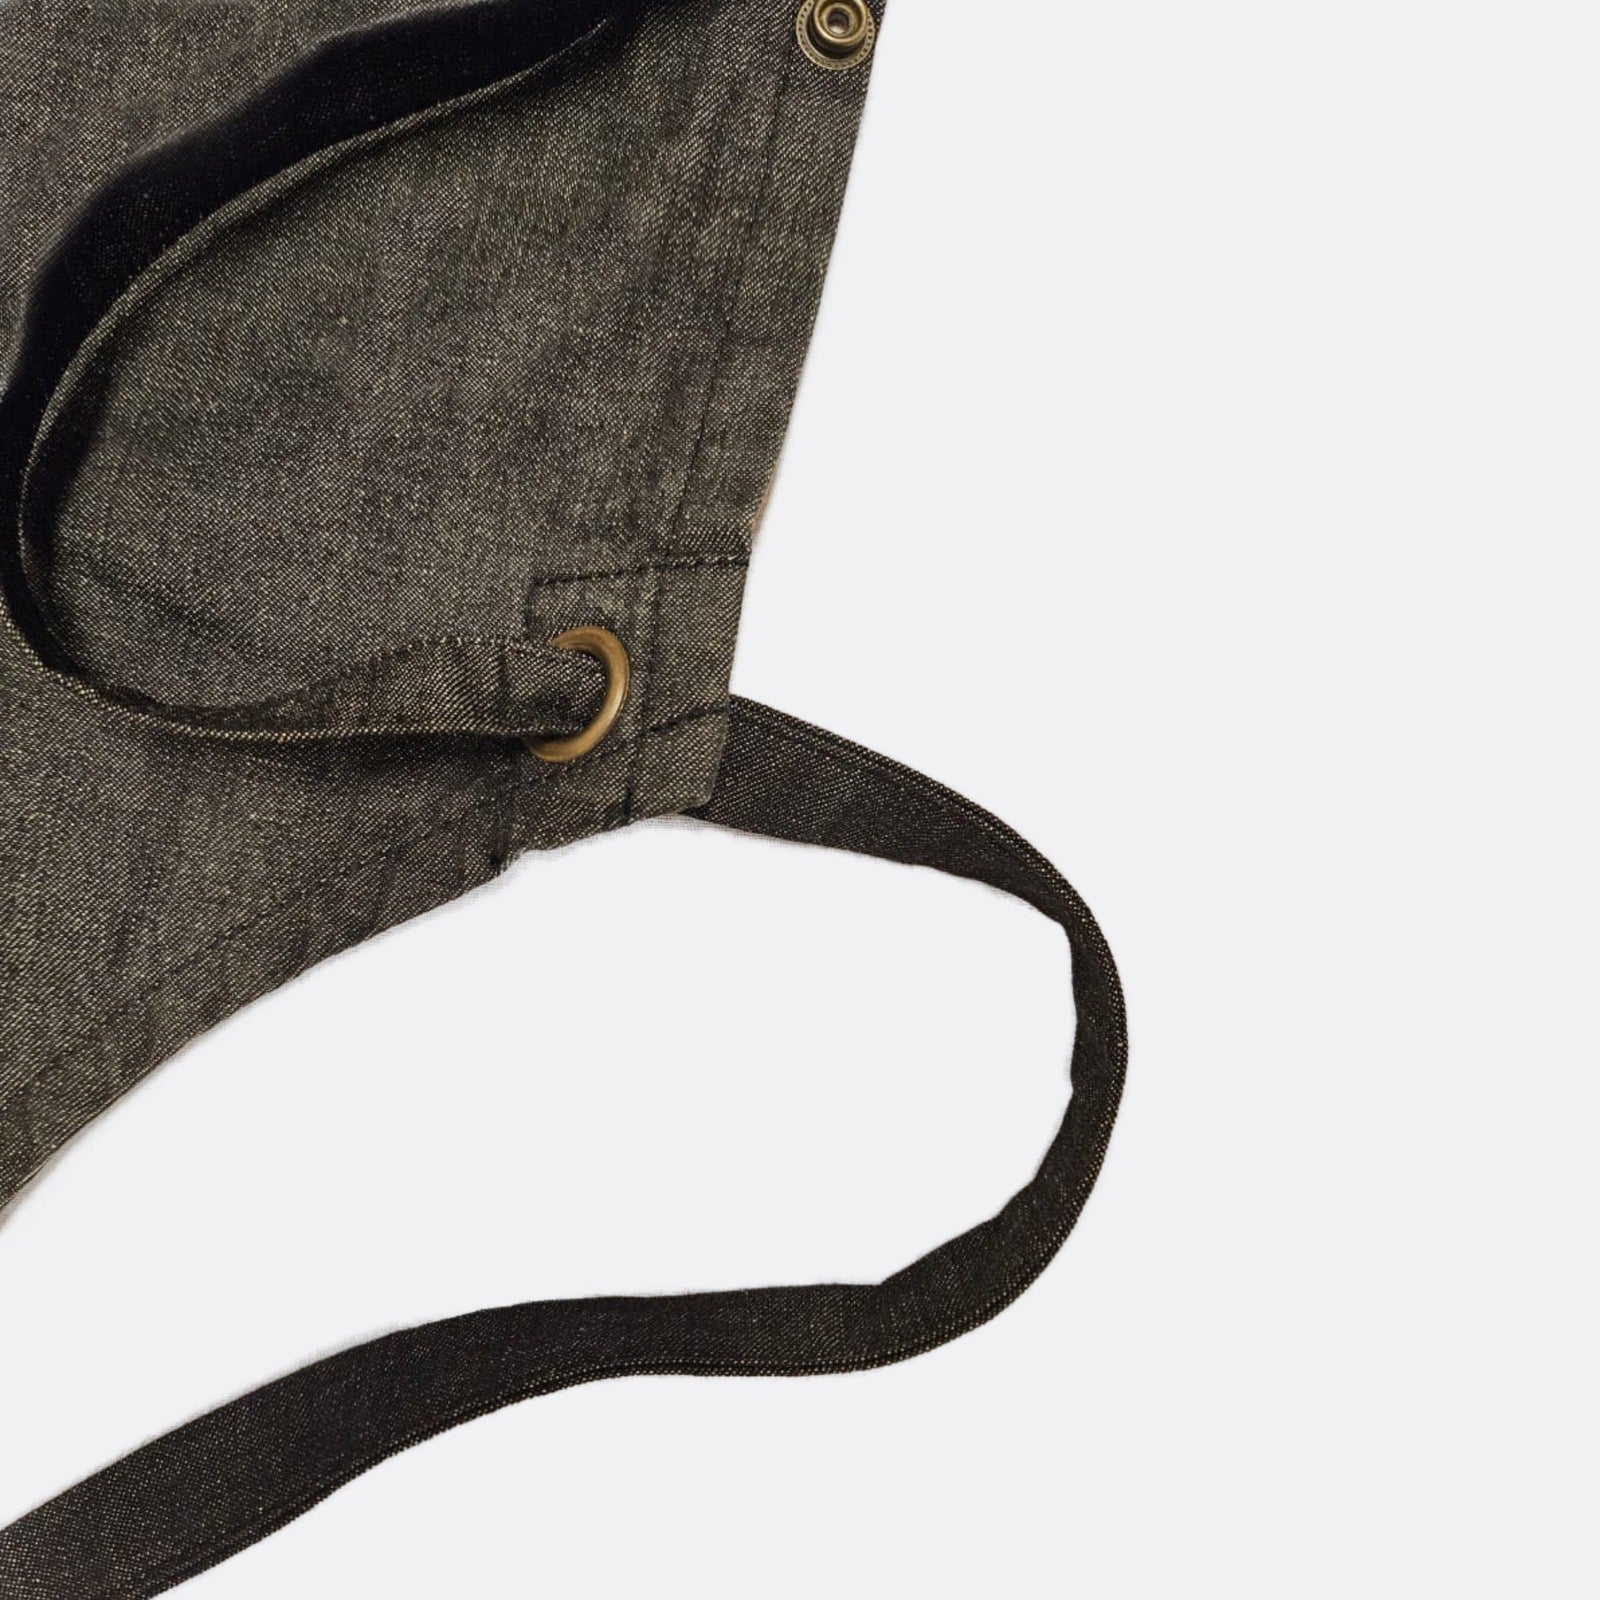 Apron - Denim Collection with adjustable pocket